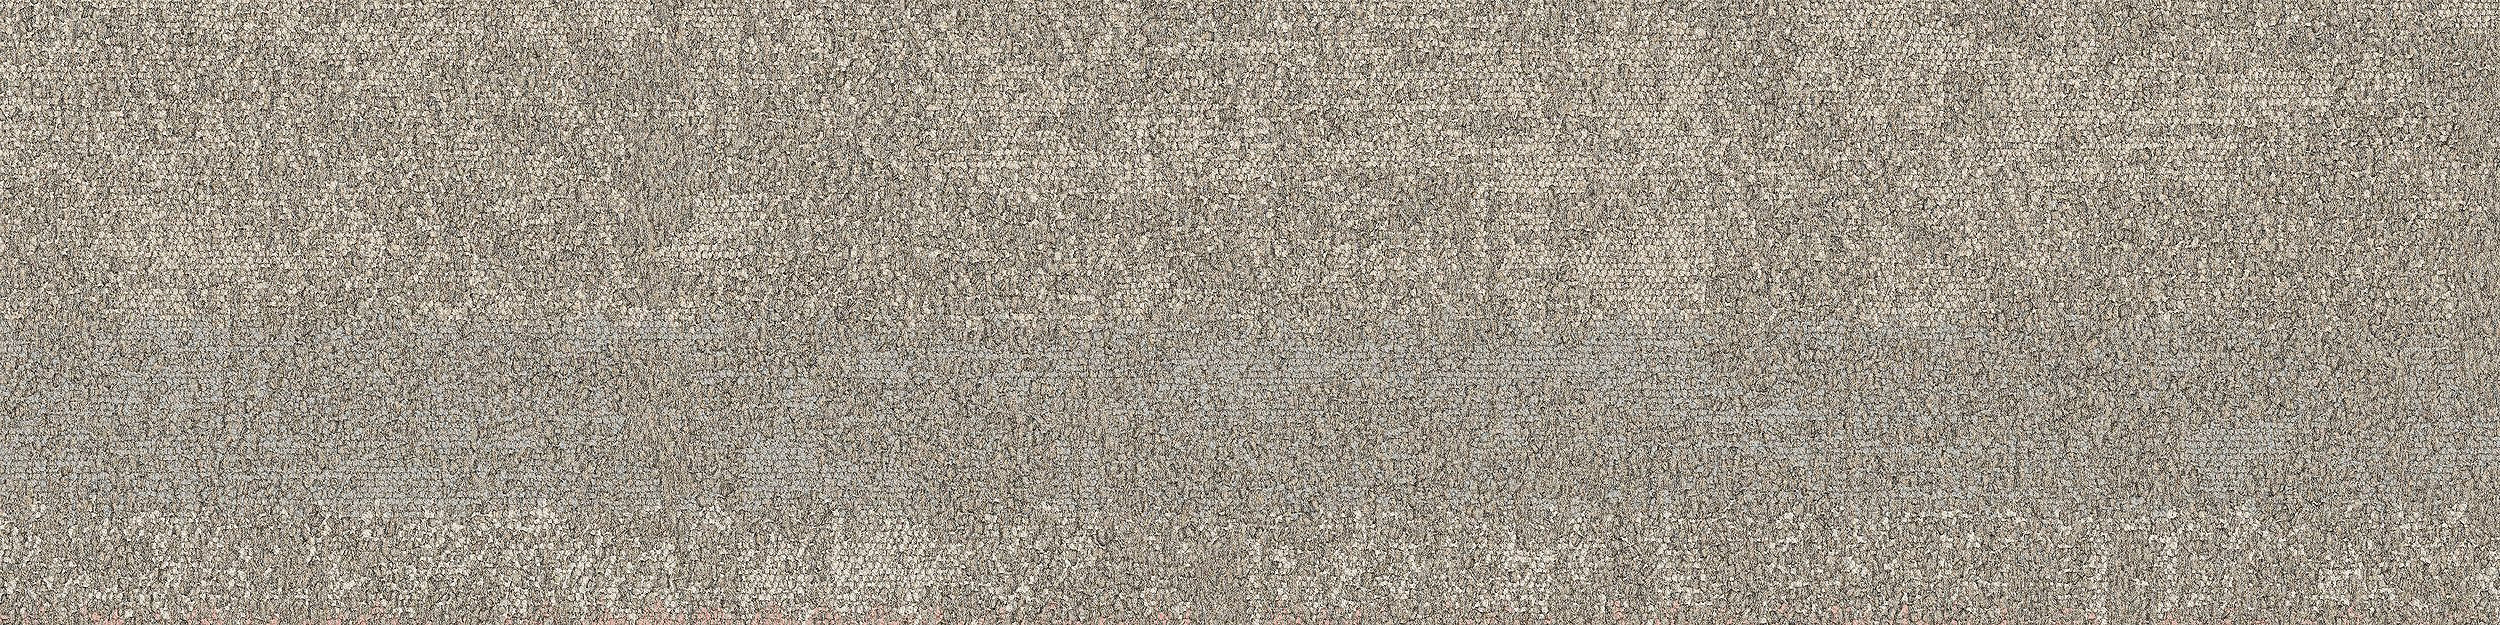 Up At Dawn Carpet Tile In Rhodium imagen número 8